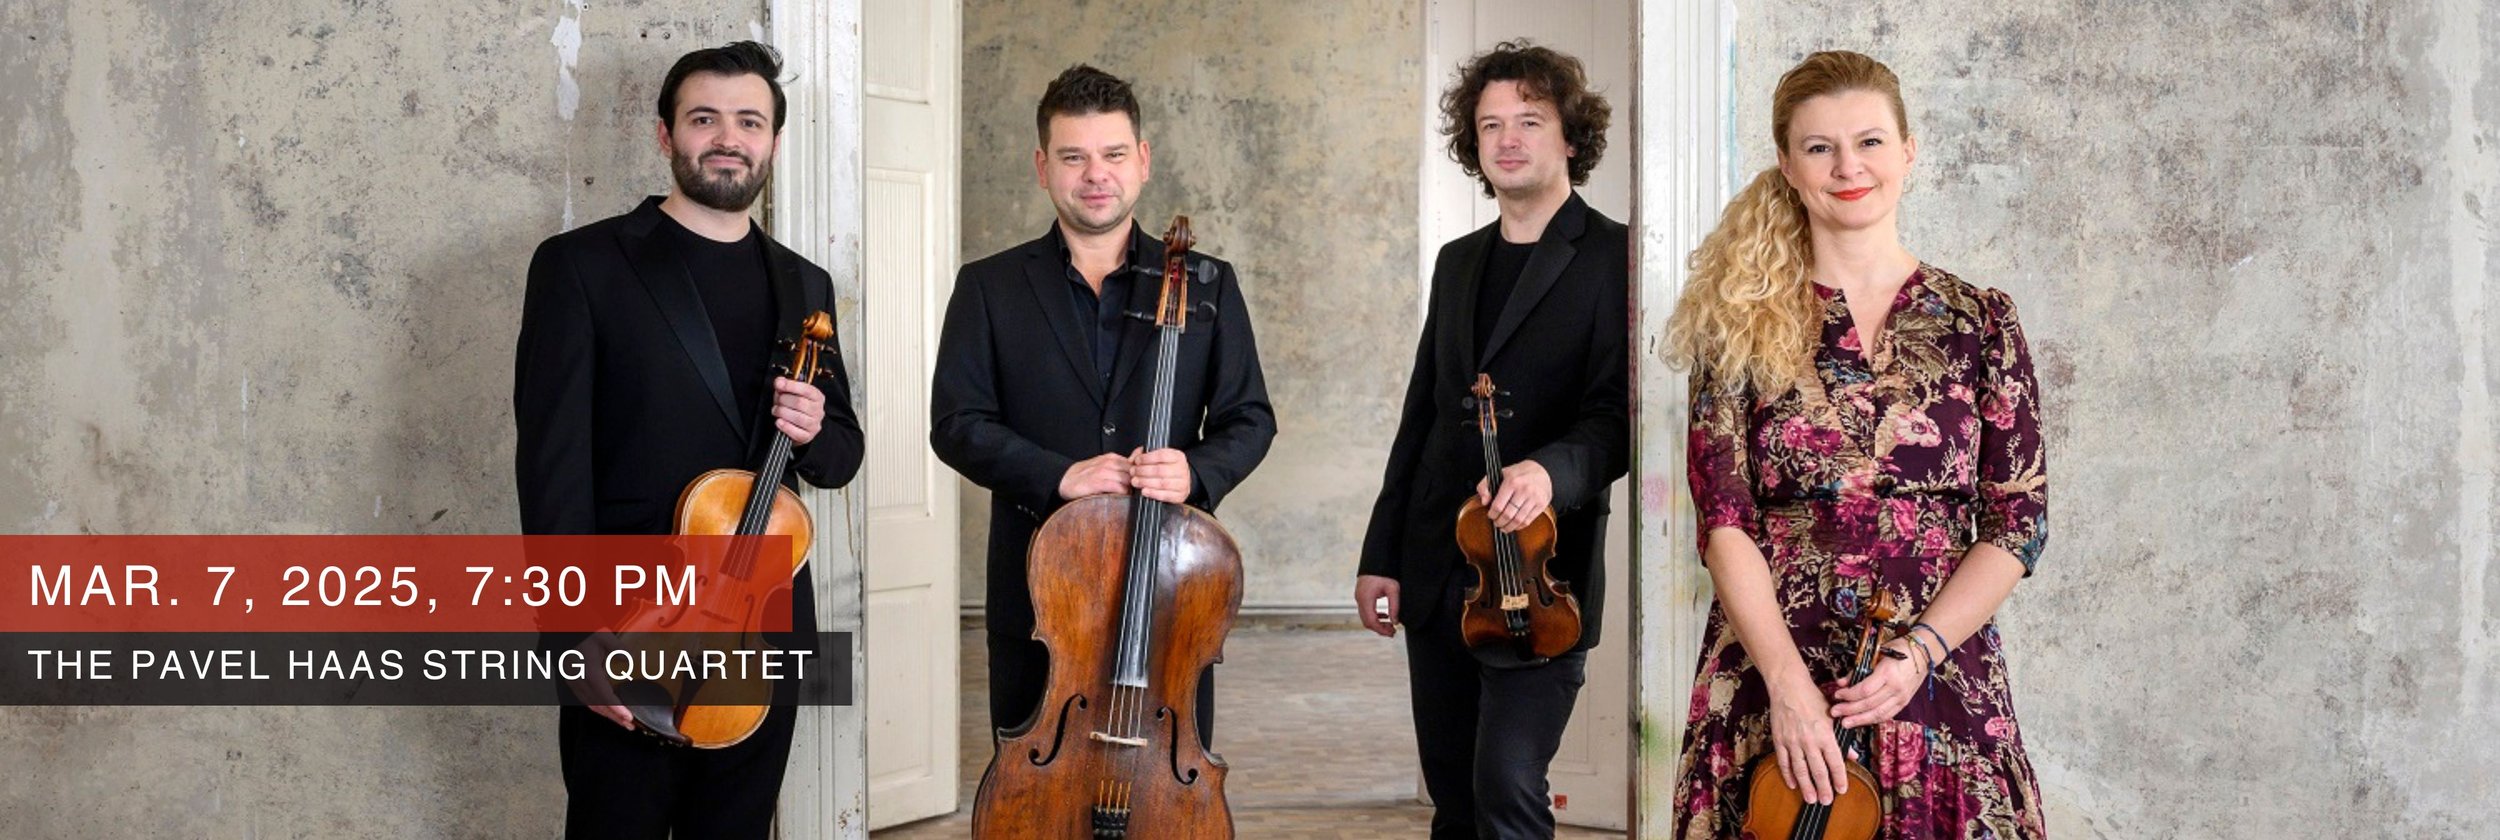 The Pavel Haas String Quartet.jpg